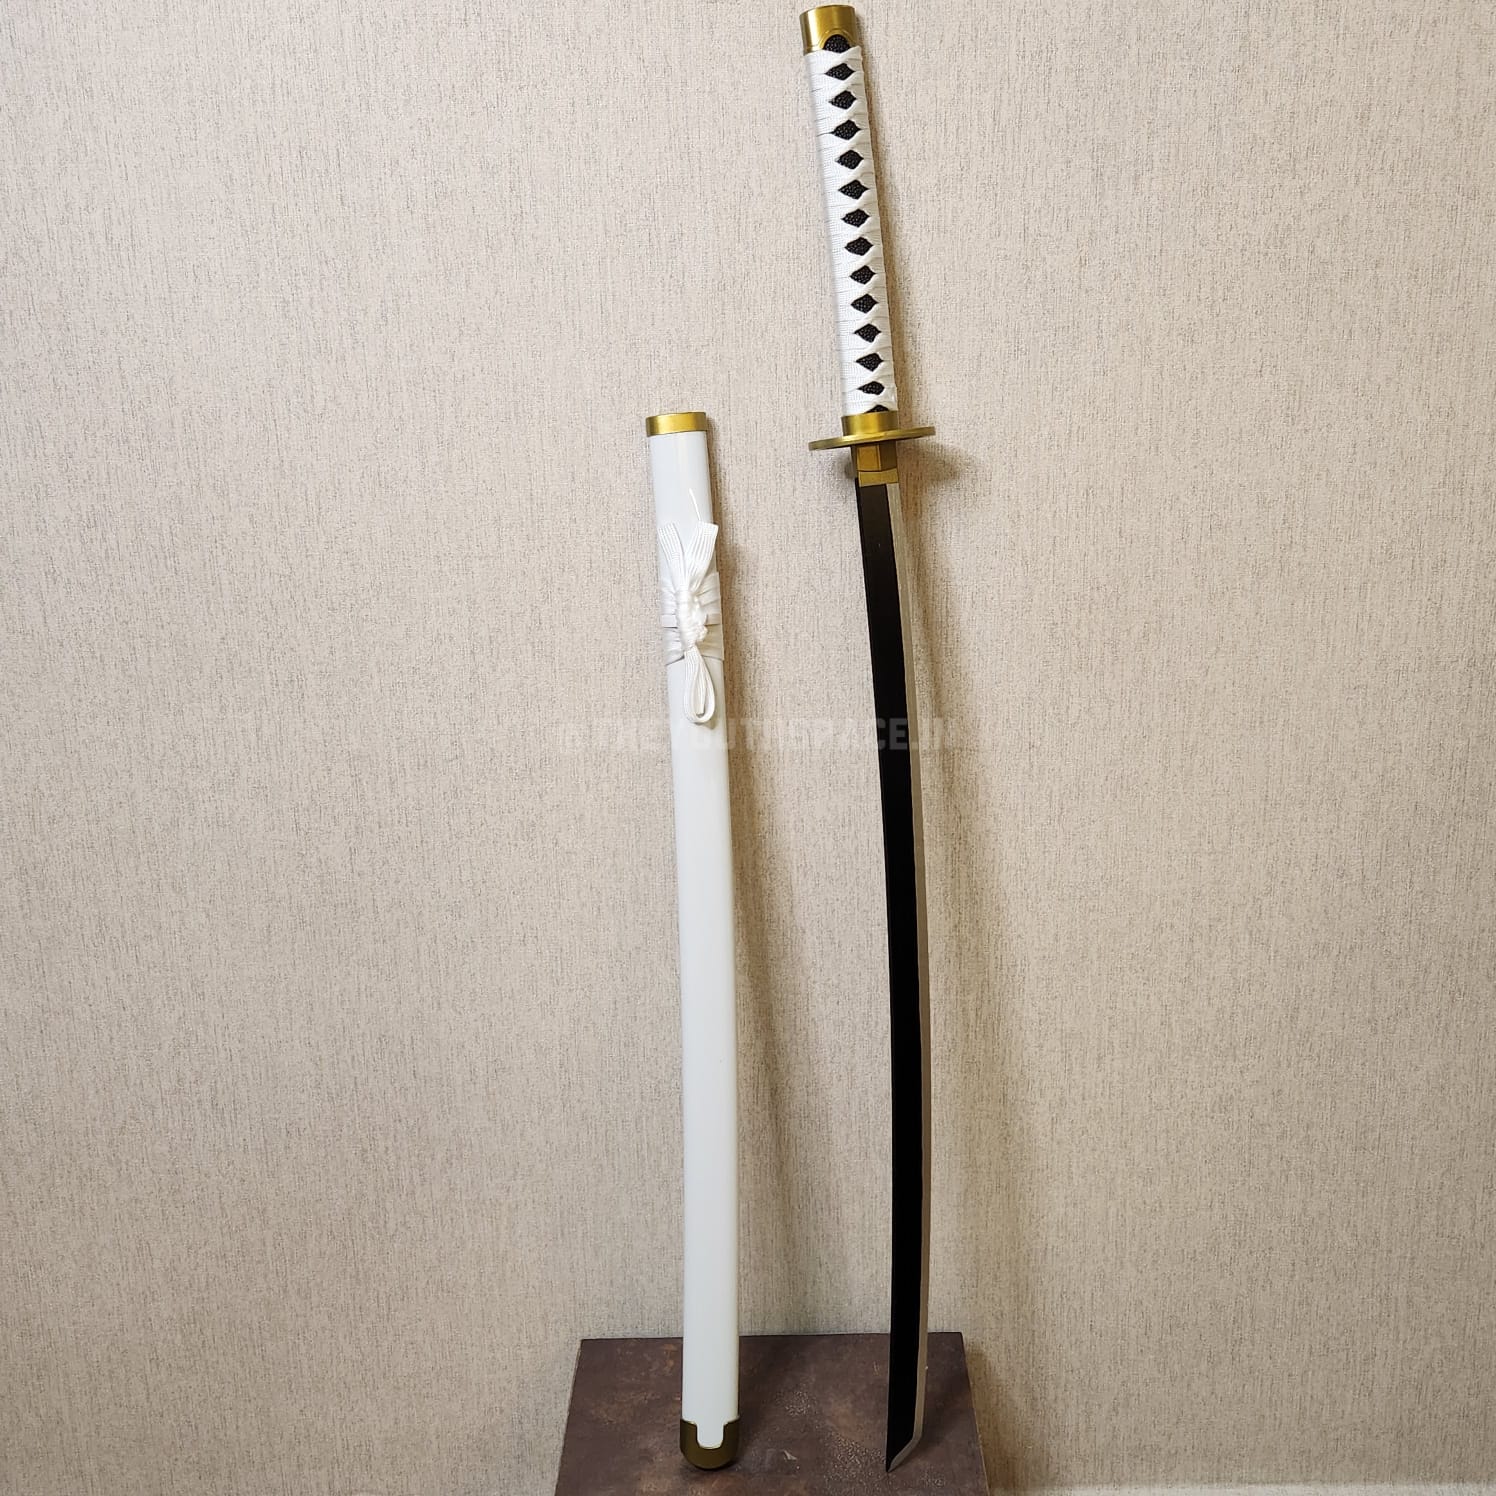 Japanese Anime Swords Samurai Swords HK8330 50cm  China Craft Sword and  Craft price  MadeinChinacom